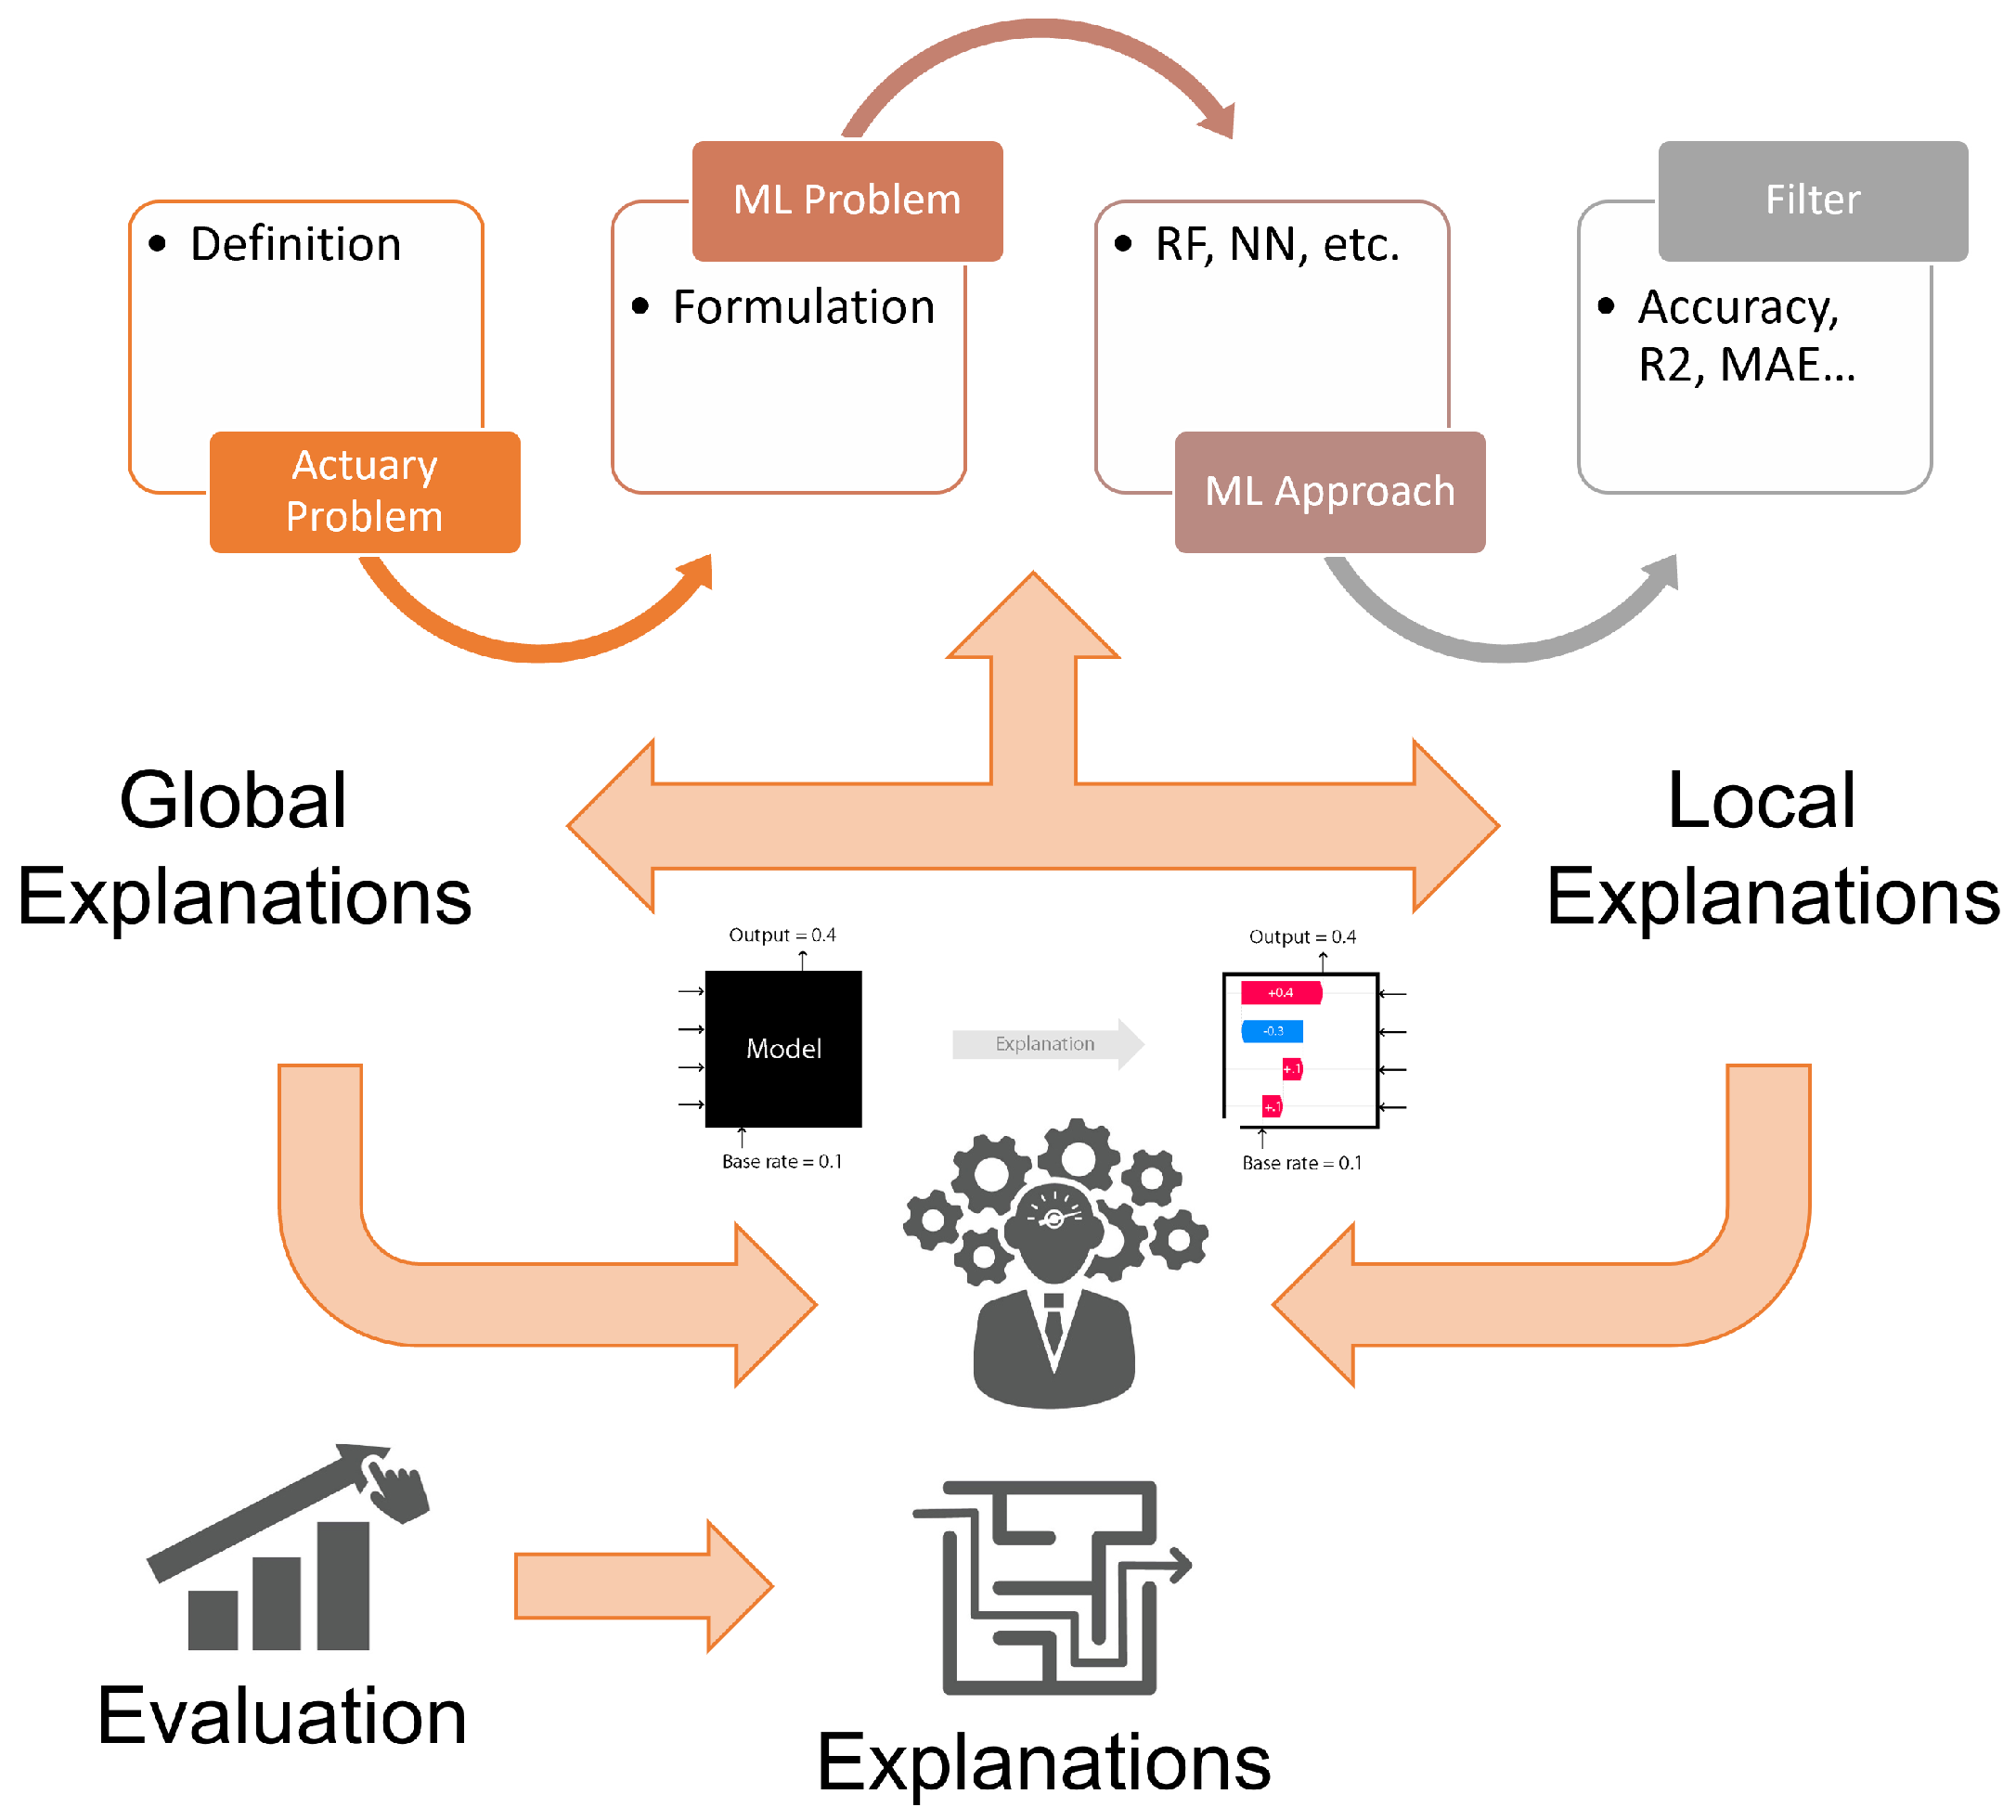 Econometrics: Definition, Models, and Methods